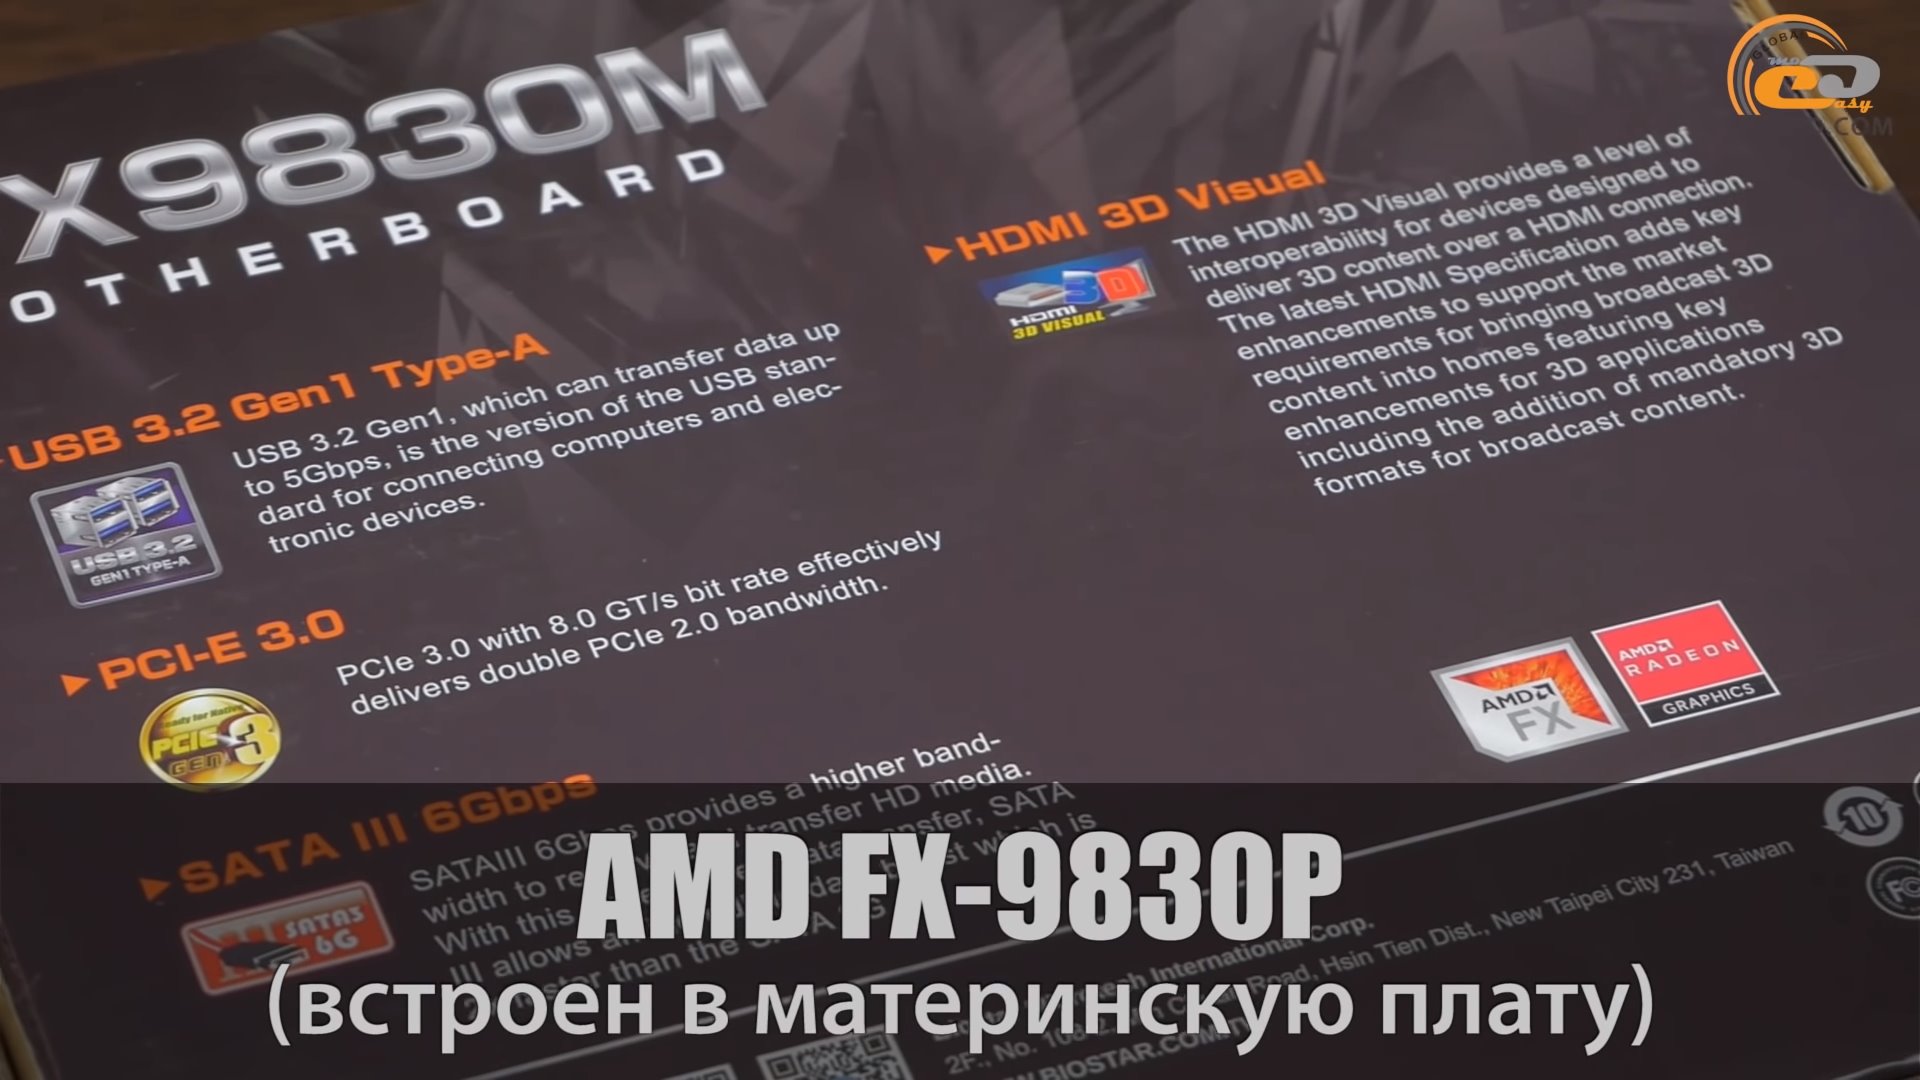 9830p amd fx UserBenchmark: AMD